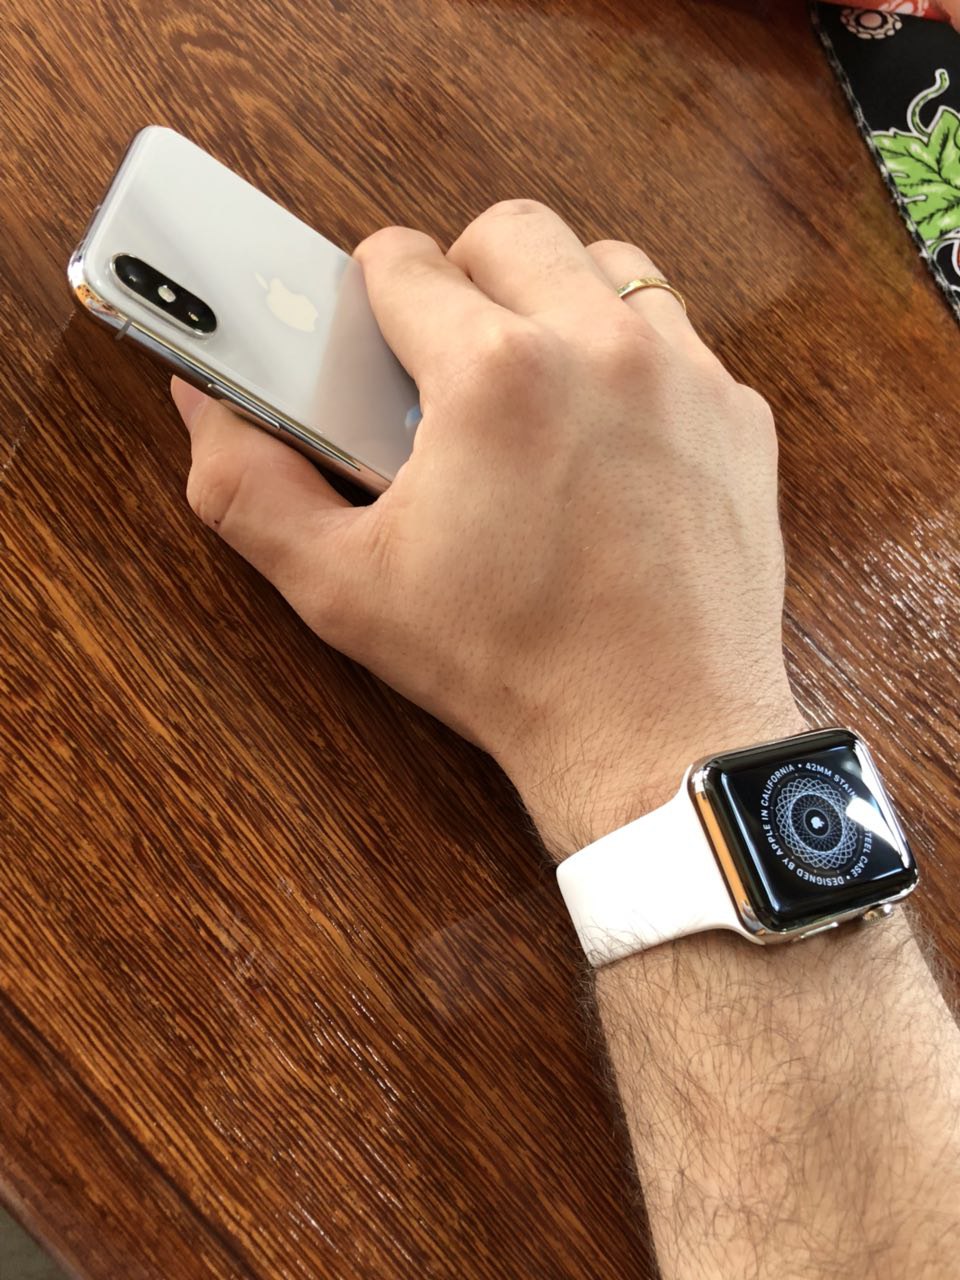 Apple Watch no braço com iPhone X